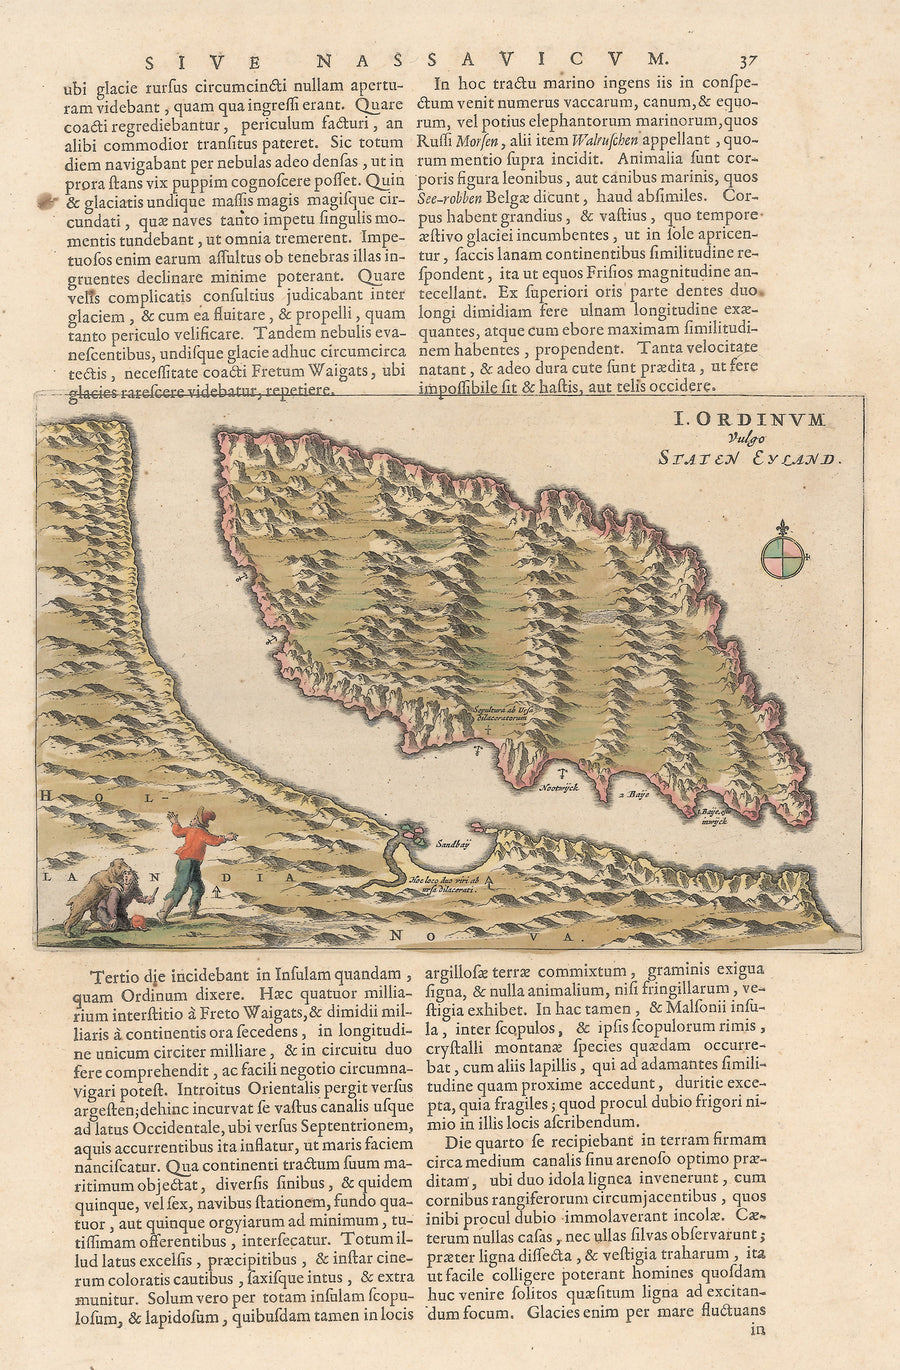 Authentic Antique Map: I. Ordinum Vulgo Staten Eyland  Map Maker: Willem Blaeu  Date: 1665 (Published) Amsterdam  Dimensions: 6.7 x 9.8 inches (17 cm x 24.9 cm) 